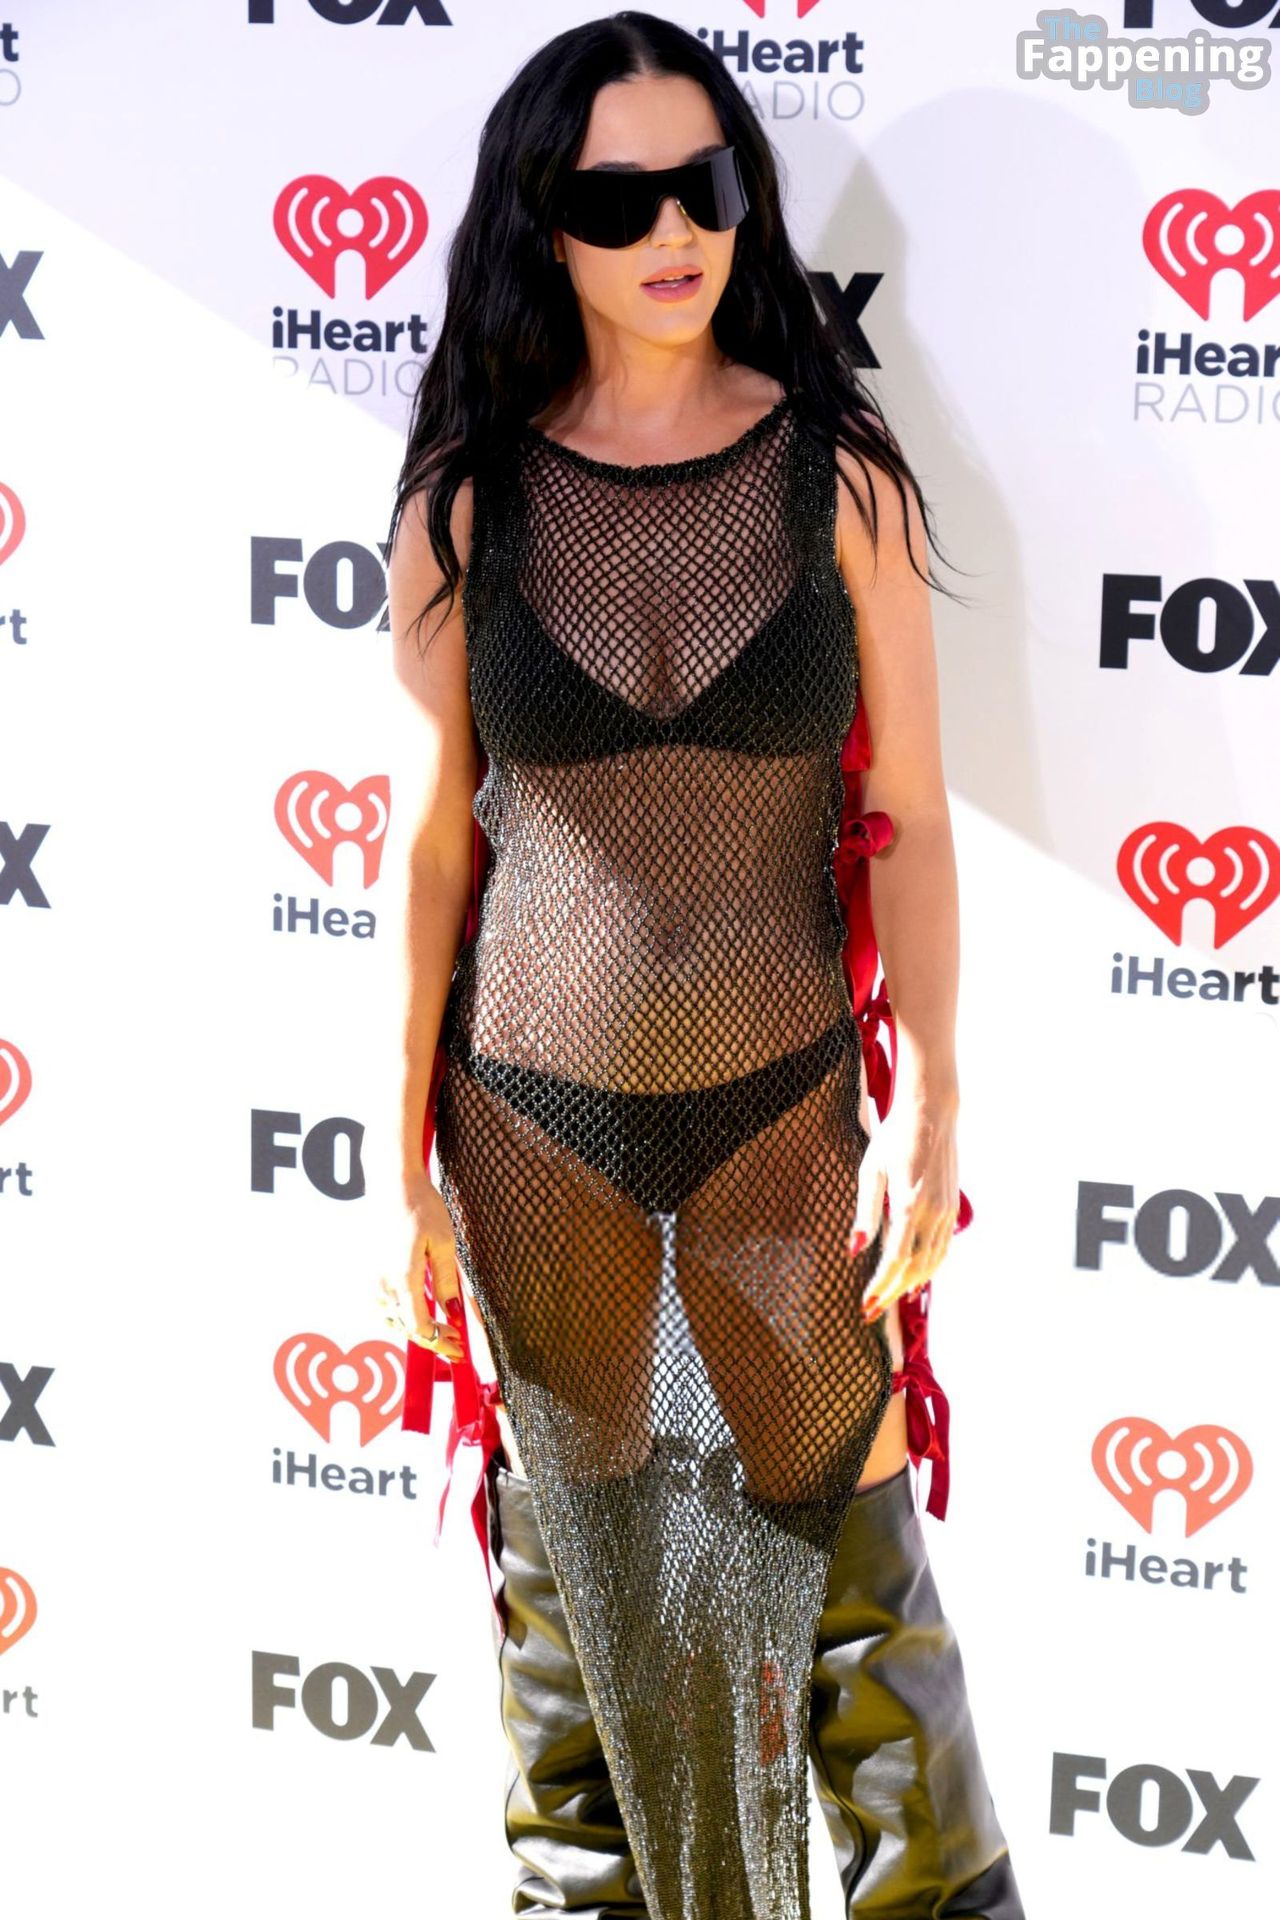 Katy-Perry-Revealing-Attire-iHeartRadio-Music-Awards-31-thefappeningblog.com_.jpg